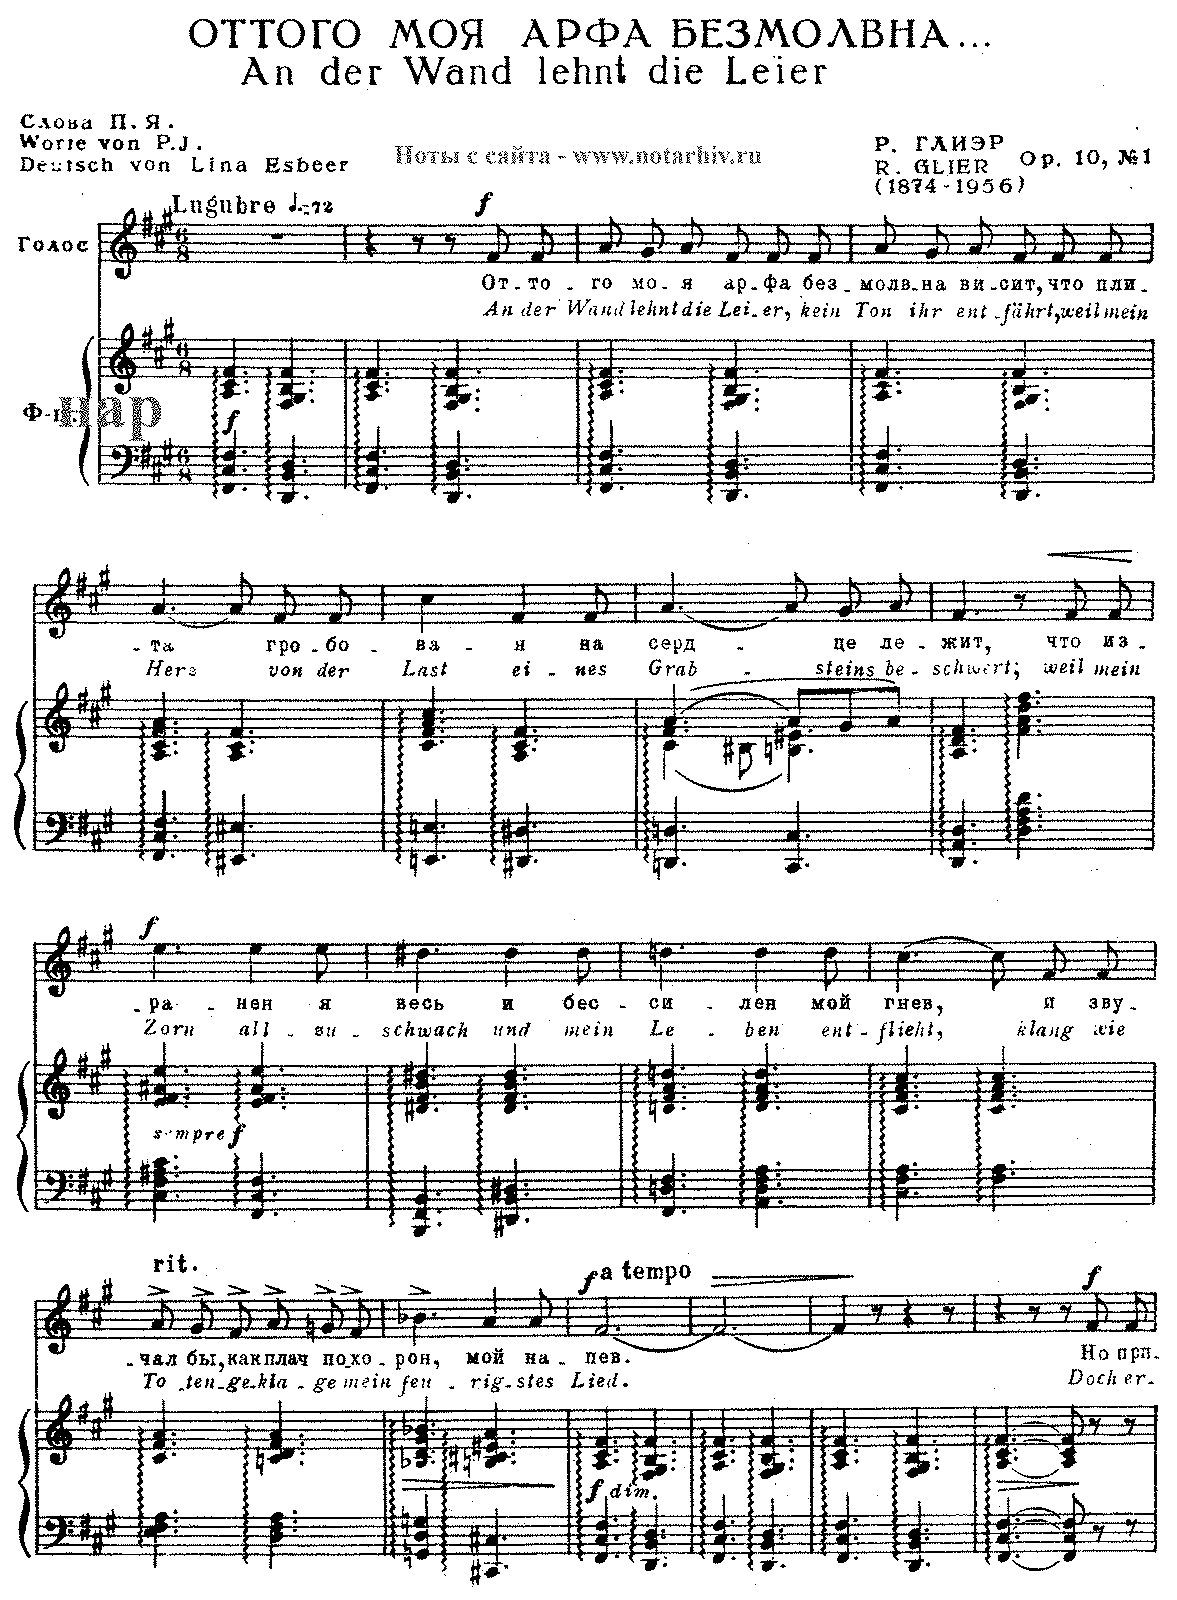 6 Romances, Op.10 (Glière, Reinhold) - IMSLP